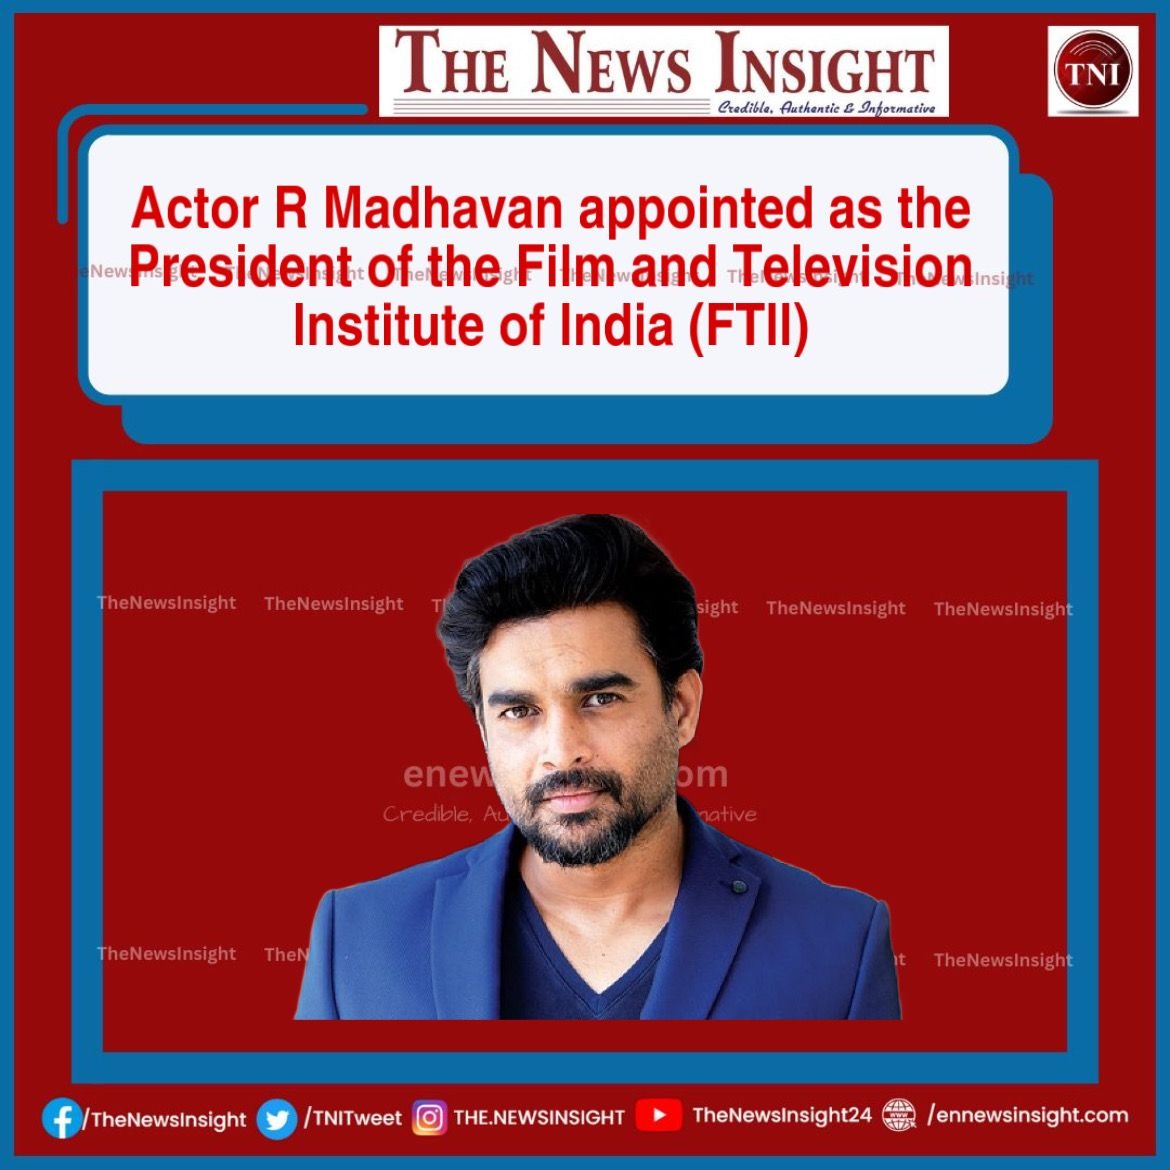 Actor R Madhavan appointed as president of the FTII
#madhavan #Bollywood  #RMadhavan #Filmandtelevision #FTII #TNI #Insight